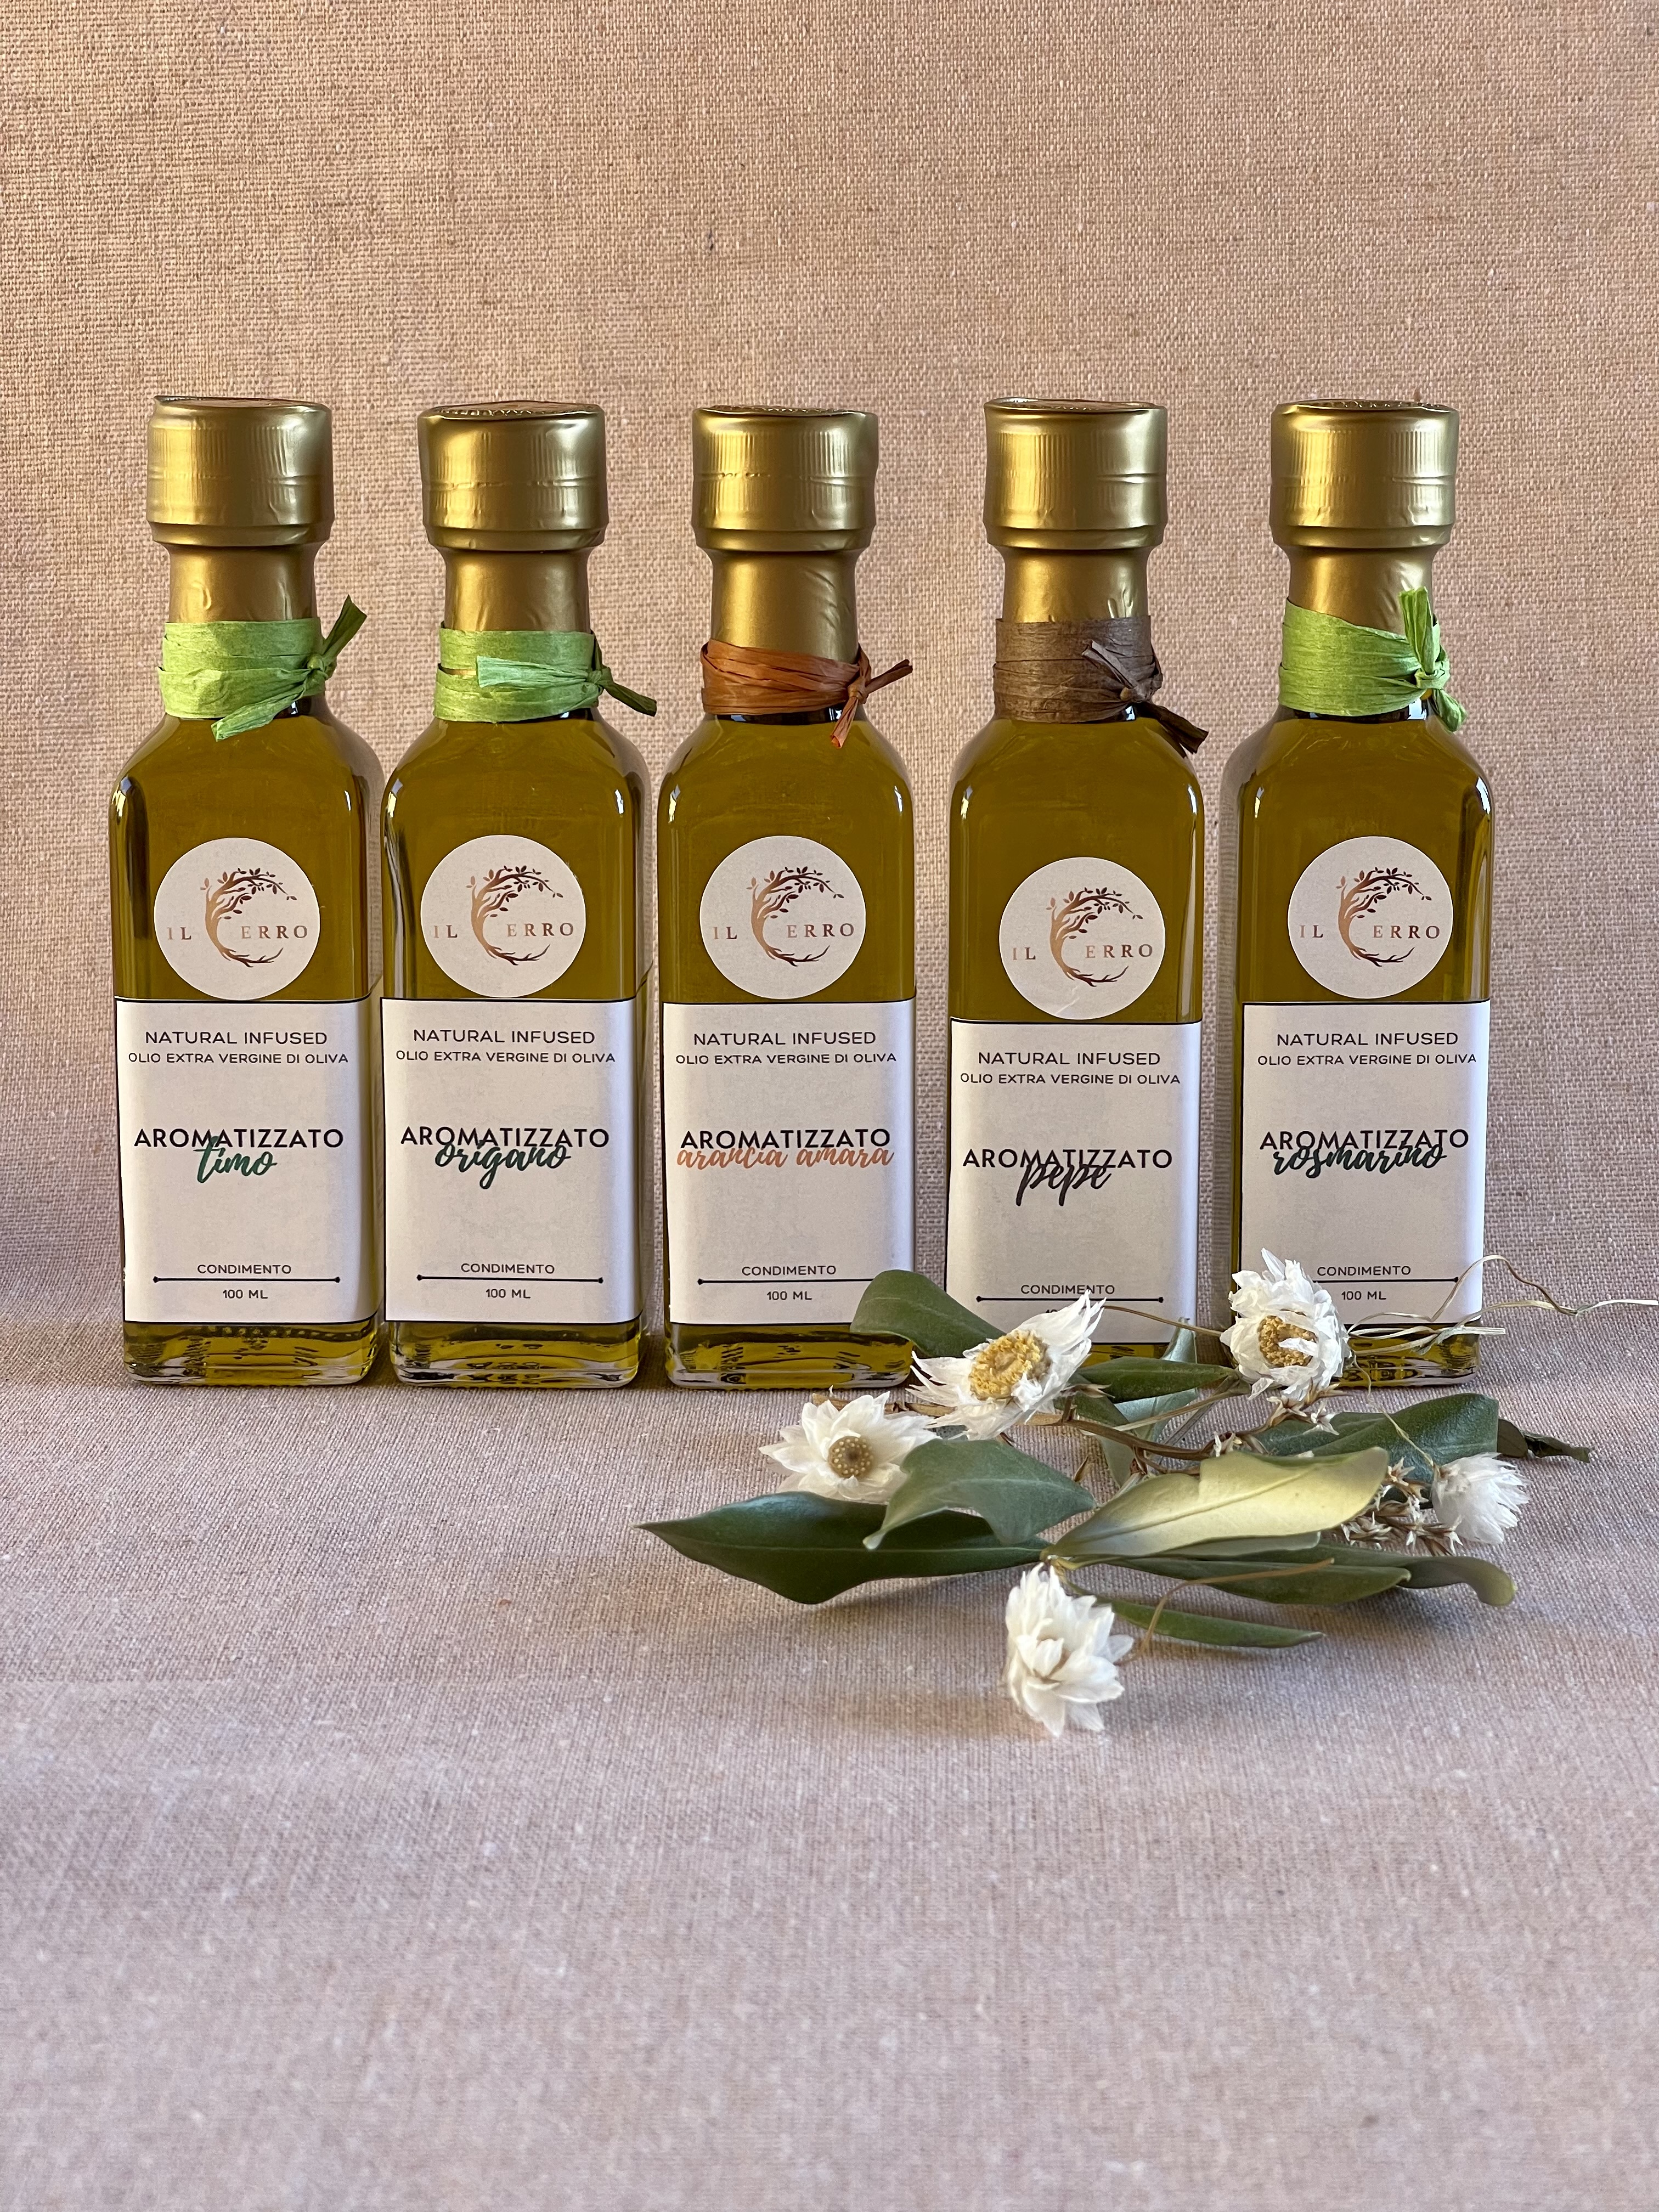 Originali bottiglie in ceramica per l'olio d'oliva di qualità Made in Italy